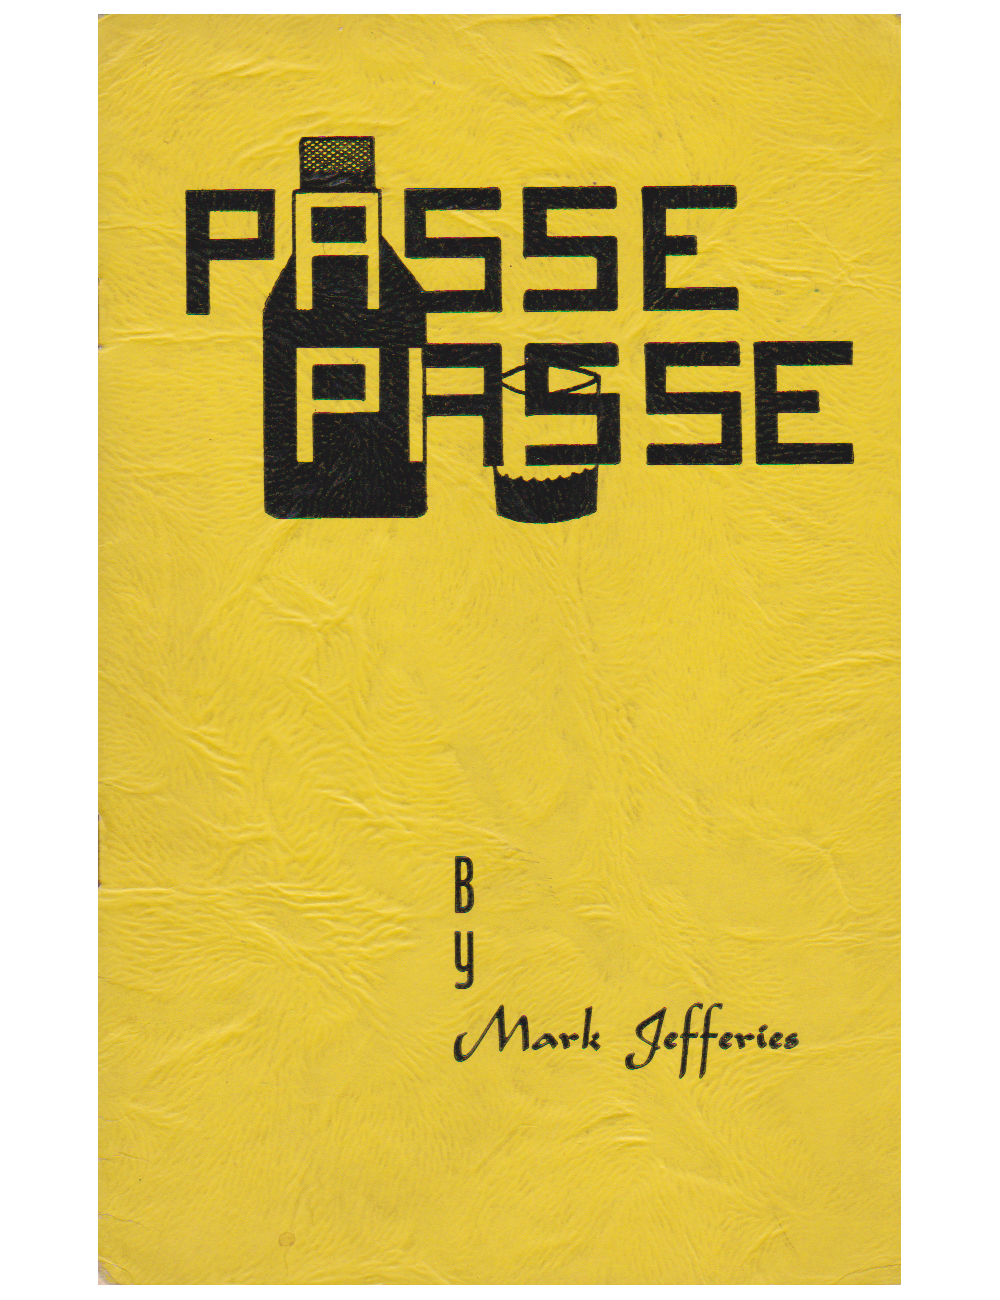 PASSE PASSE by Mark Jefferies